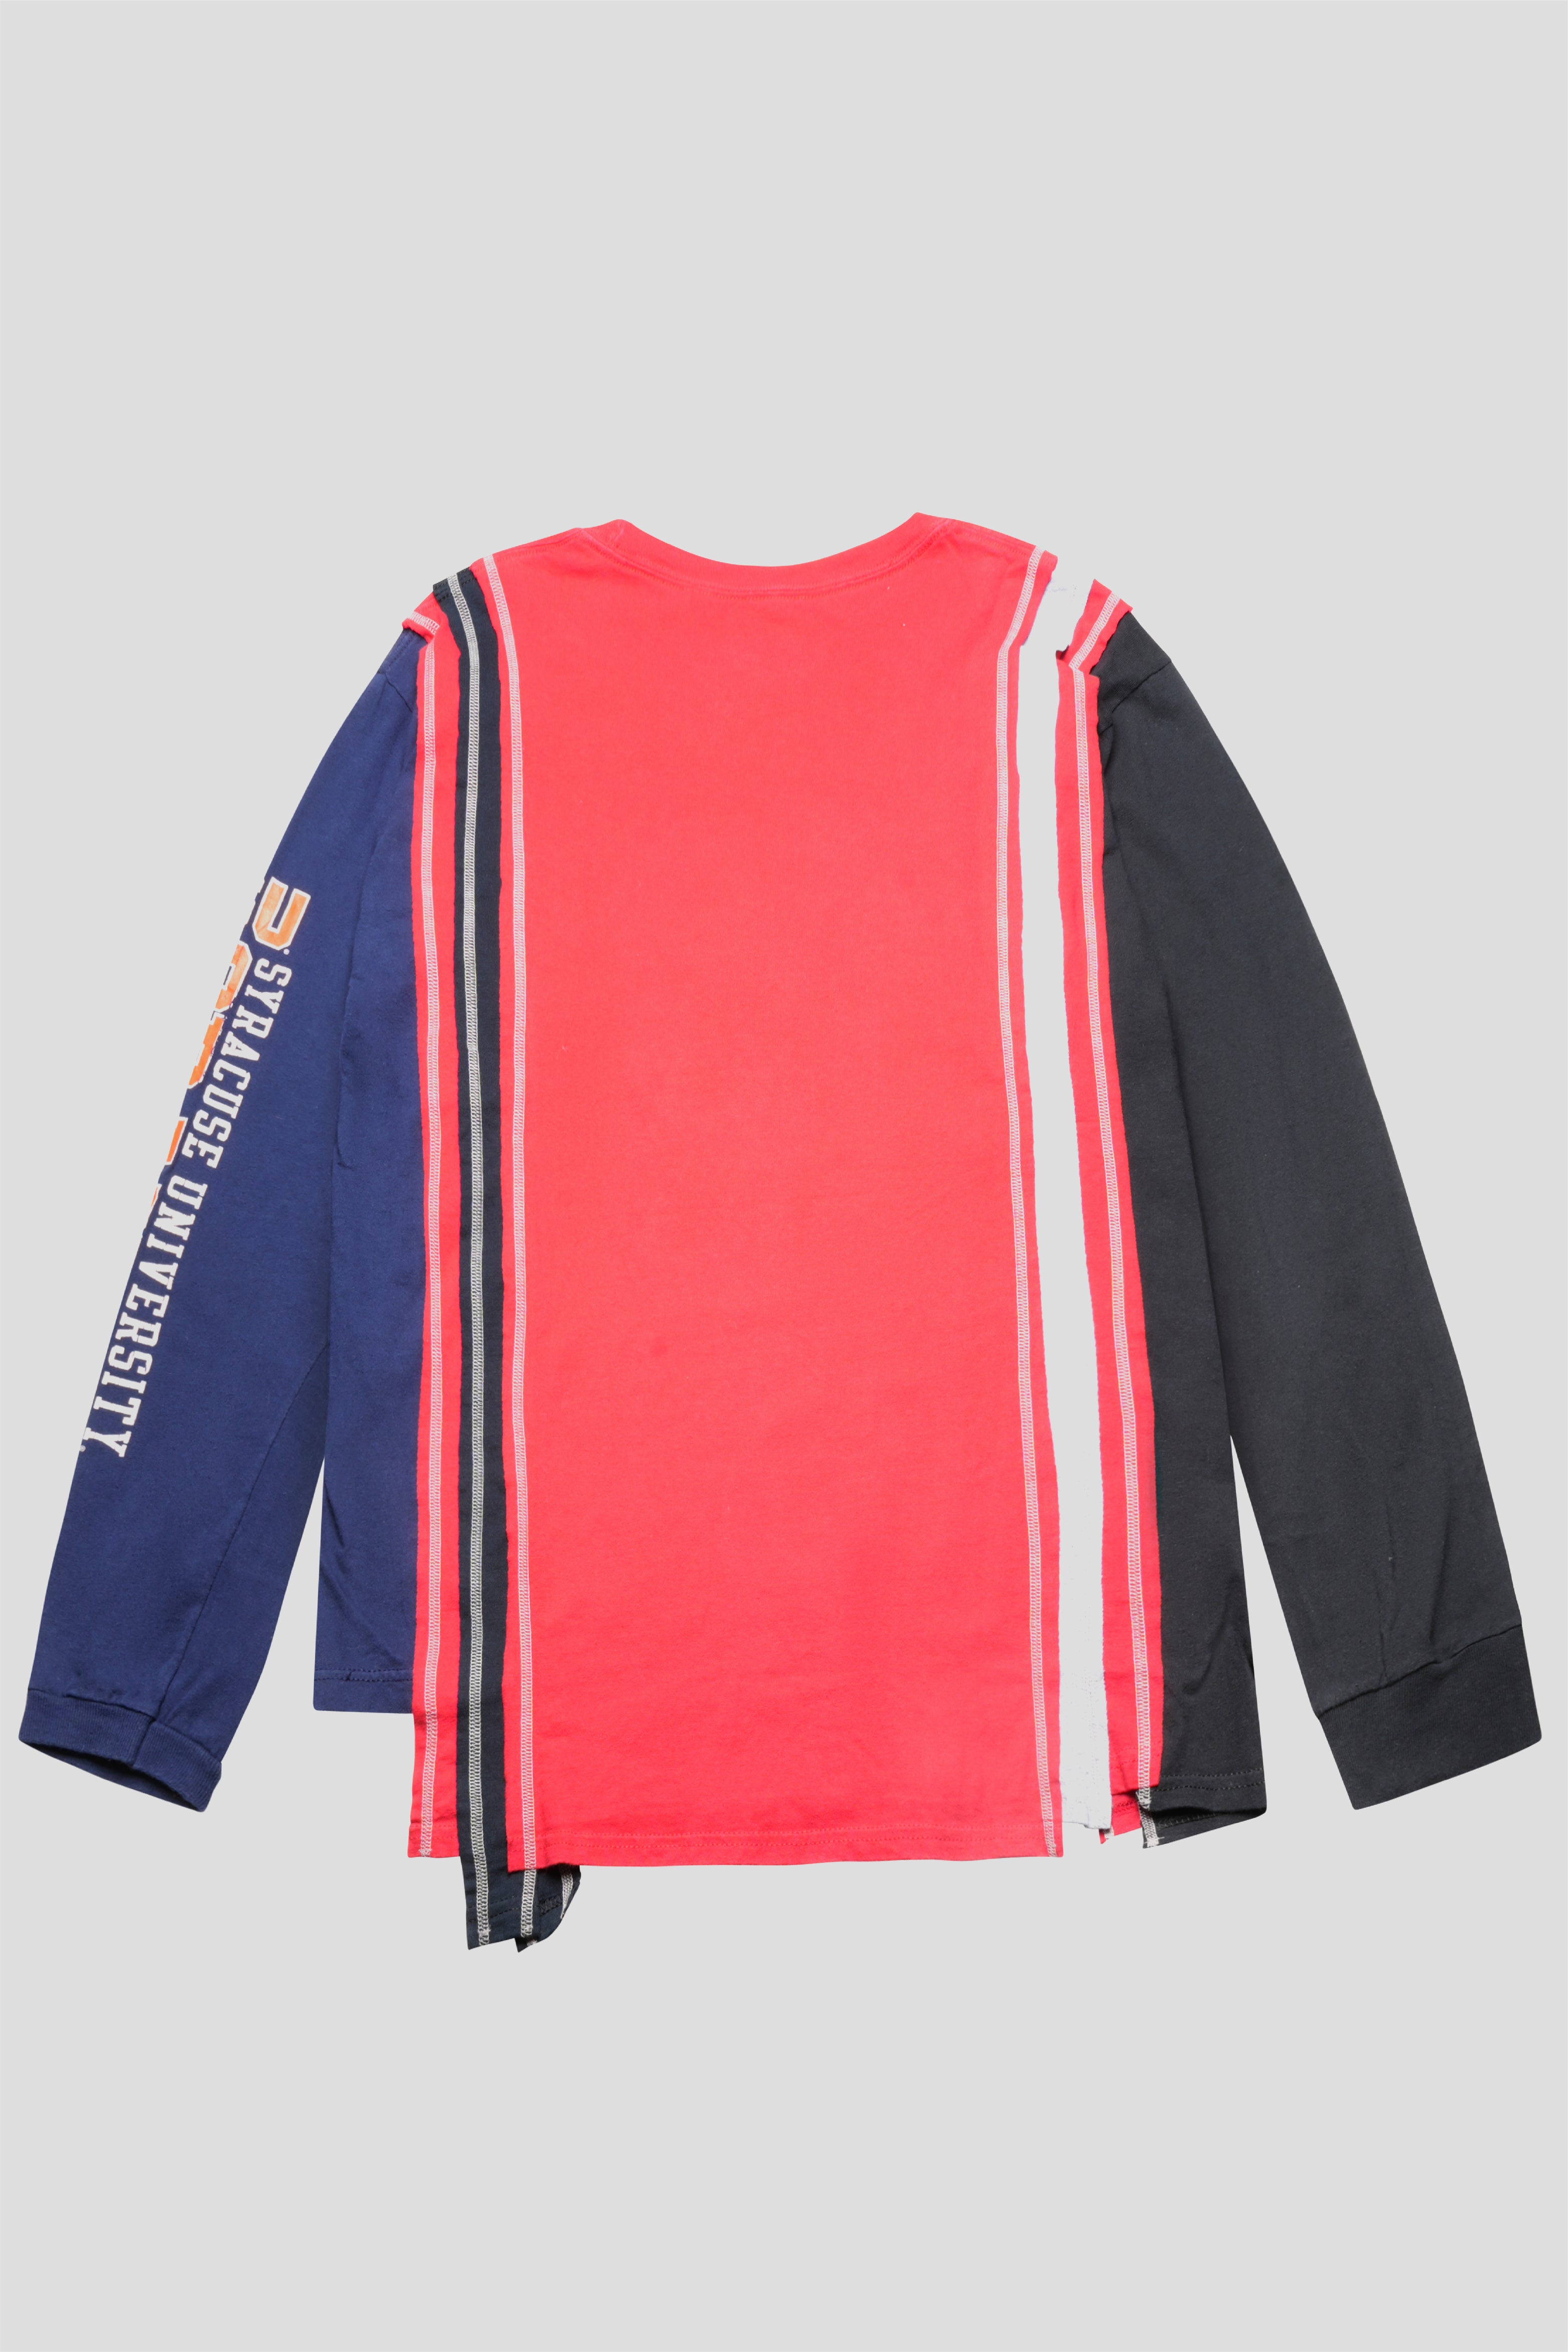 Selectshop FRAME - NEEDLES 7 Cuts College Long-Sleeve Tee - L(B) T-Shirts Concept Store Dubai